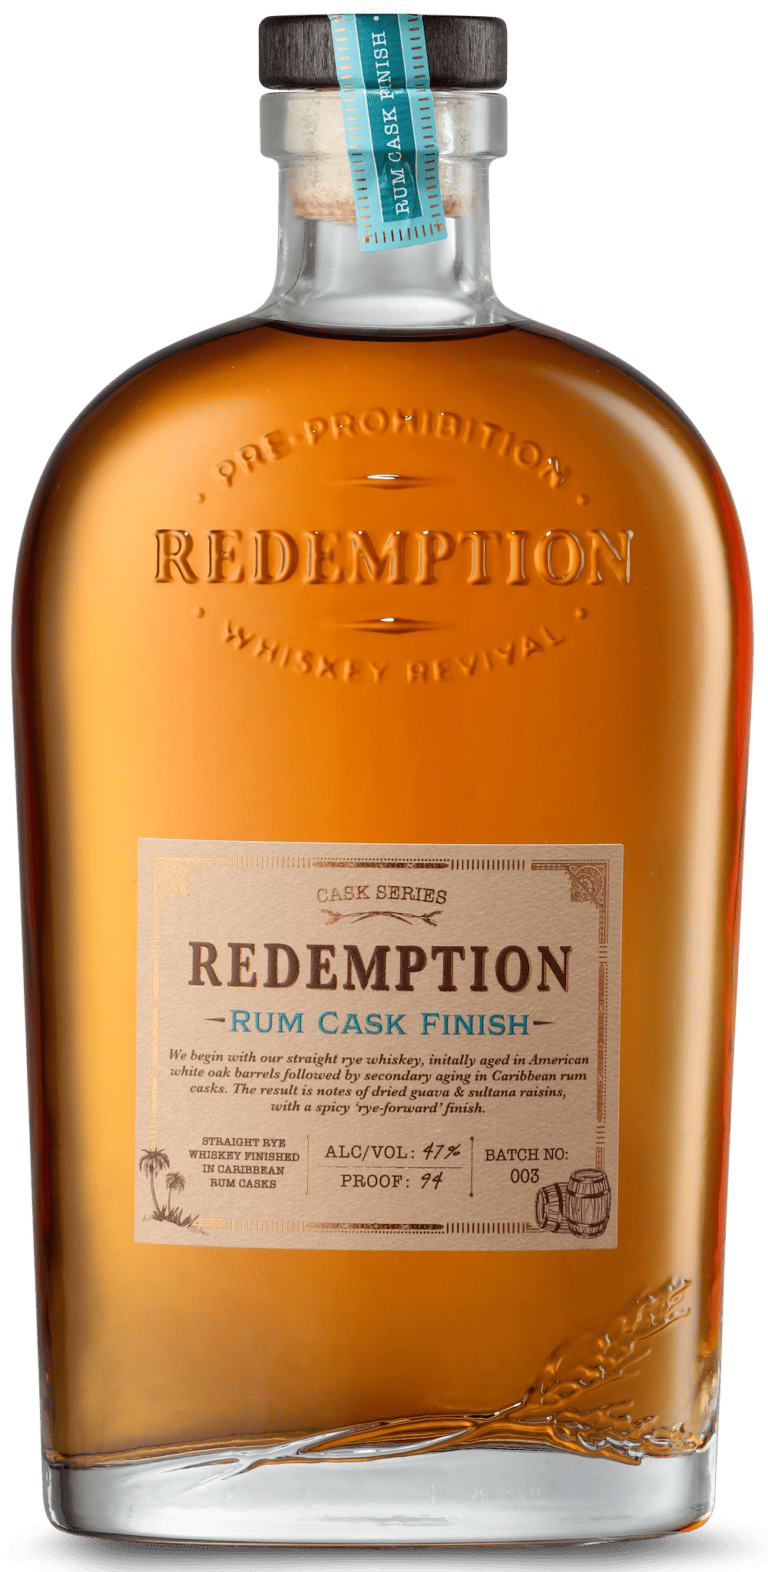 redemption rum cask finish rye whiskey bottle